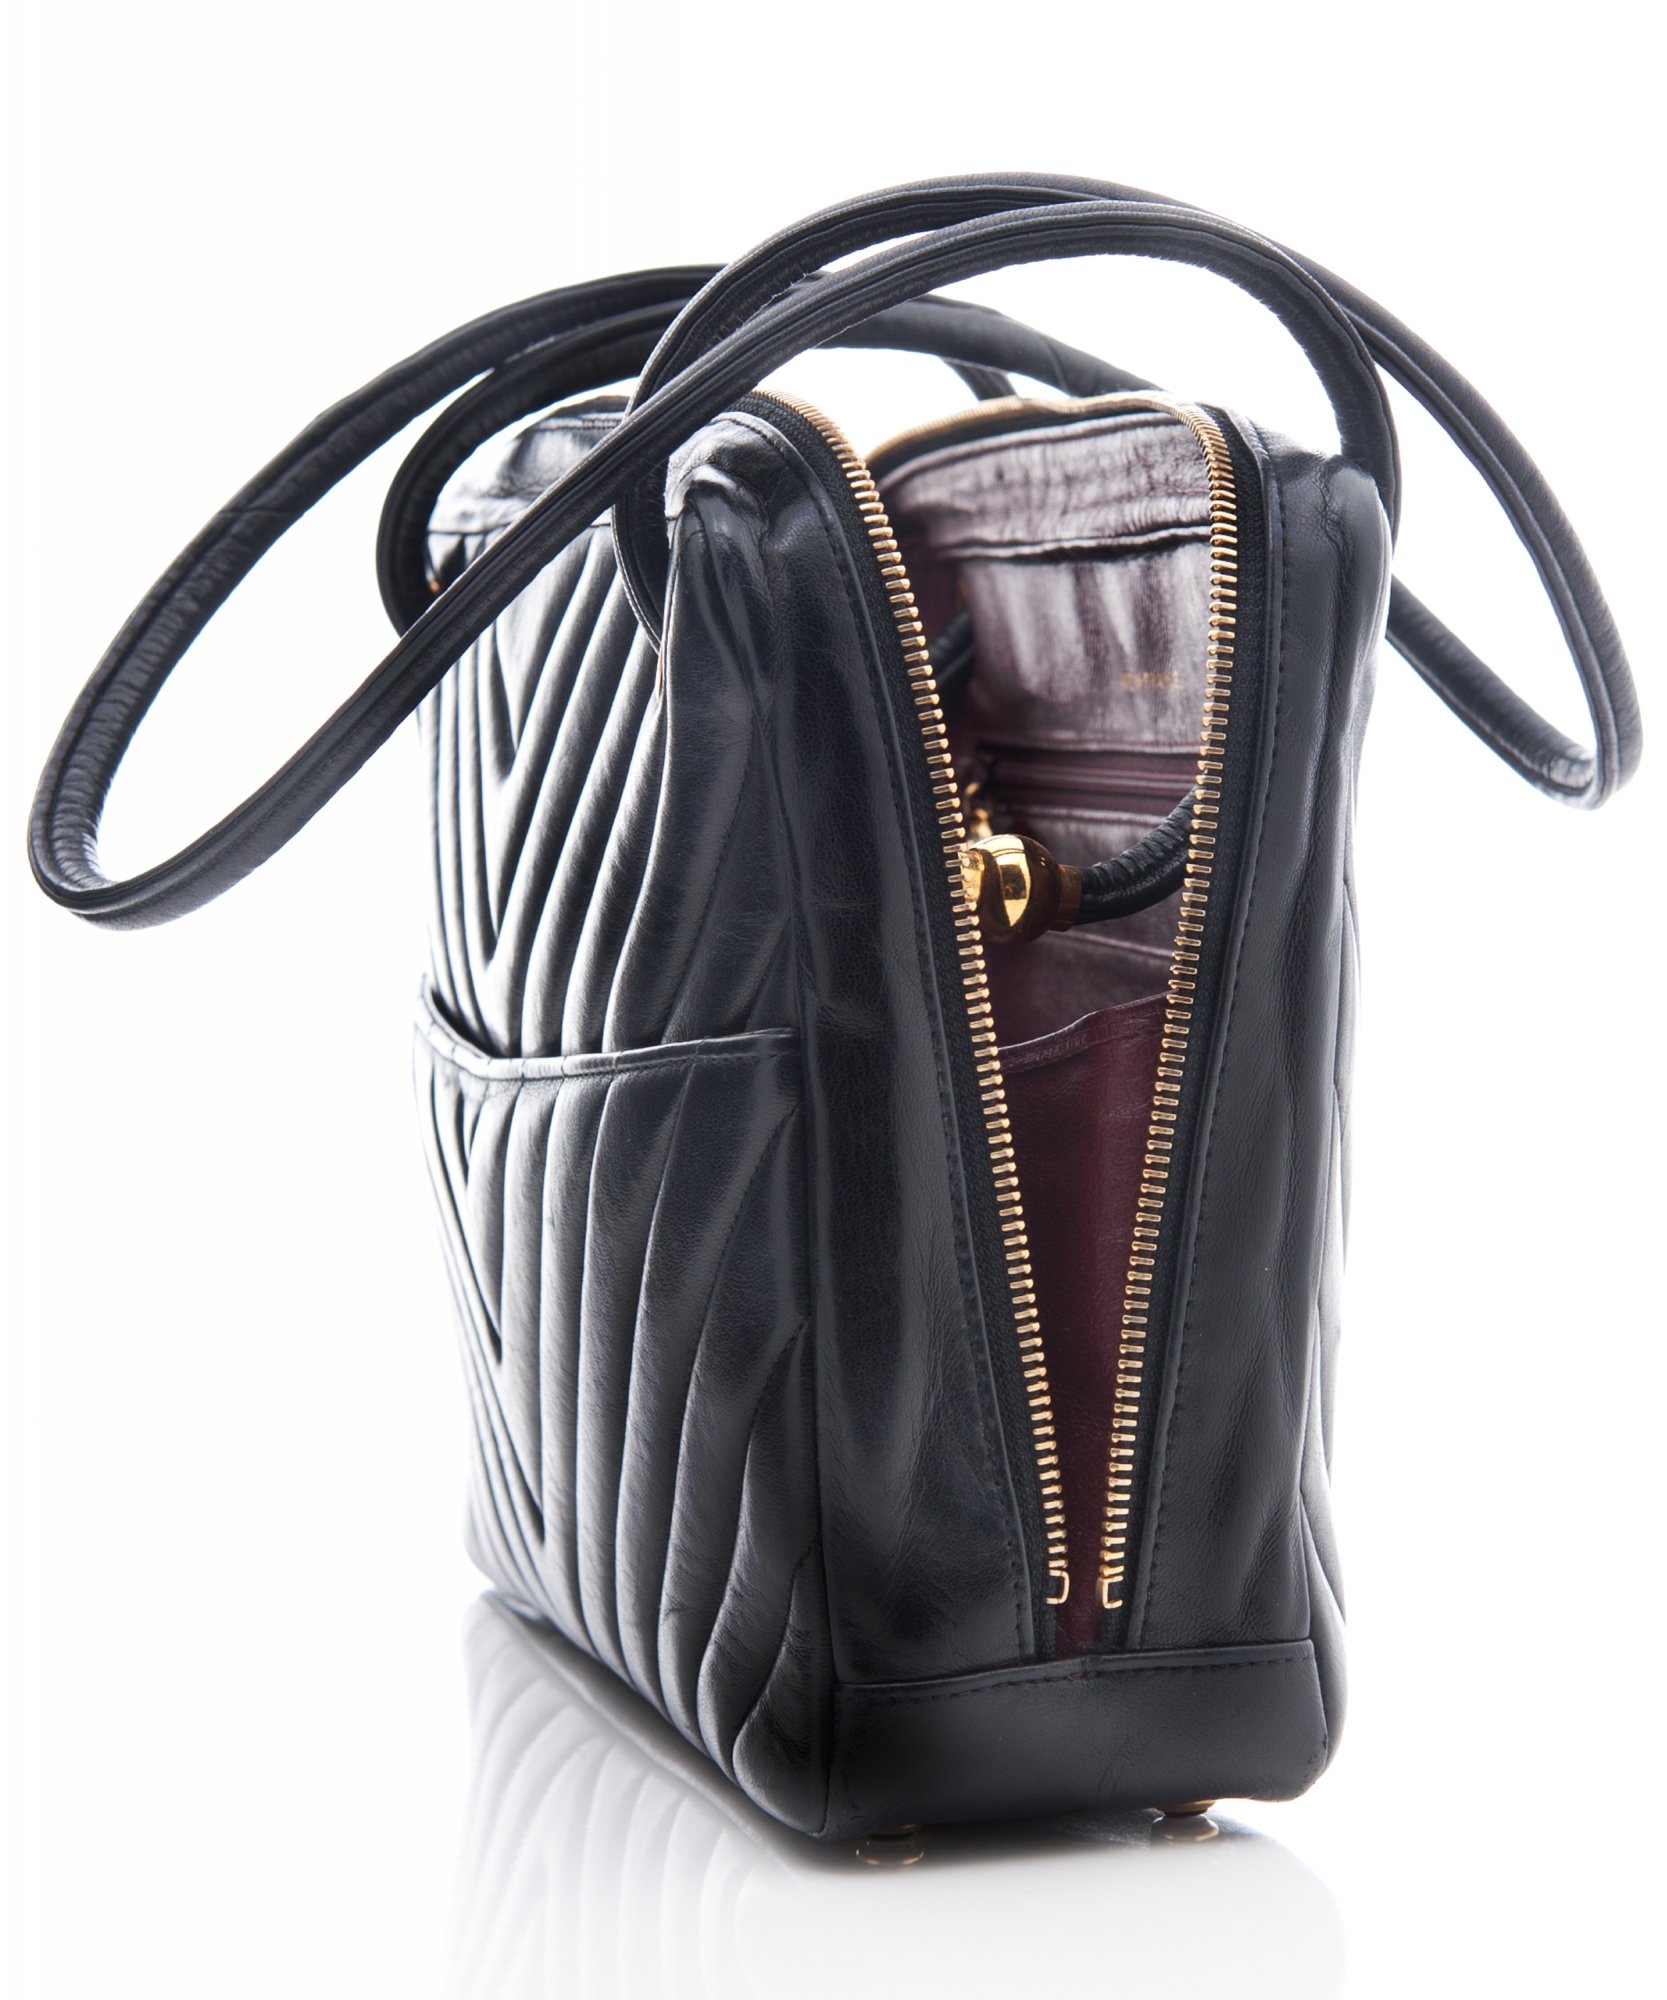 Chanel Black Chevron Quilted Leather Shoulder Bag - Chanel